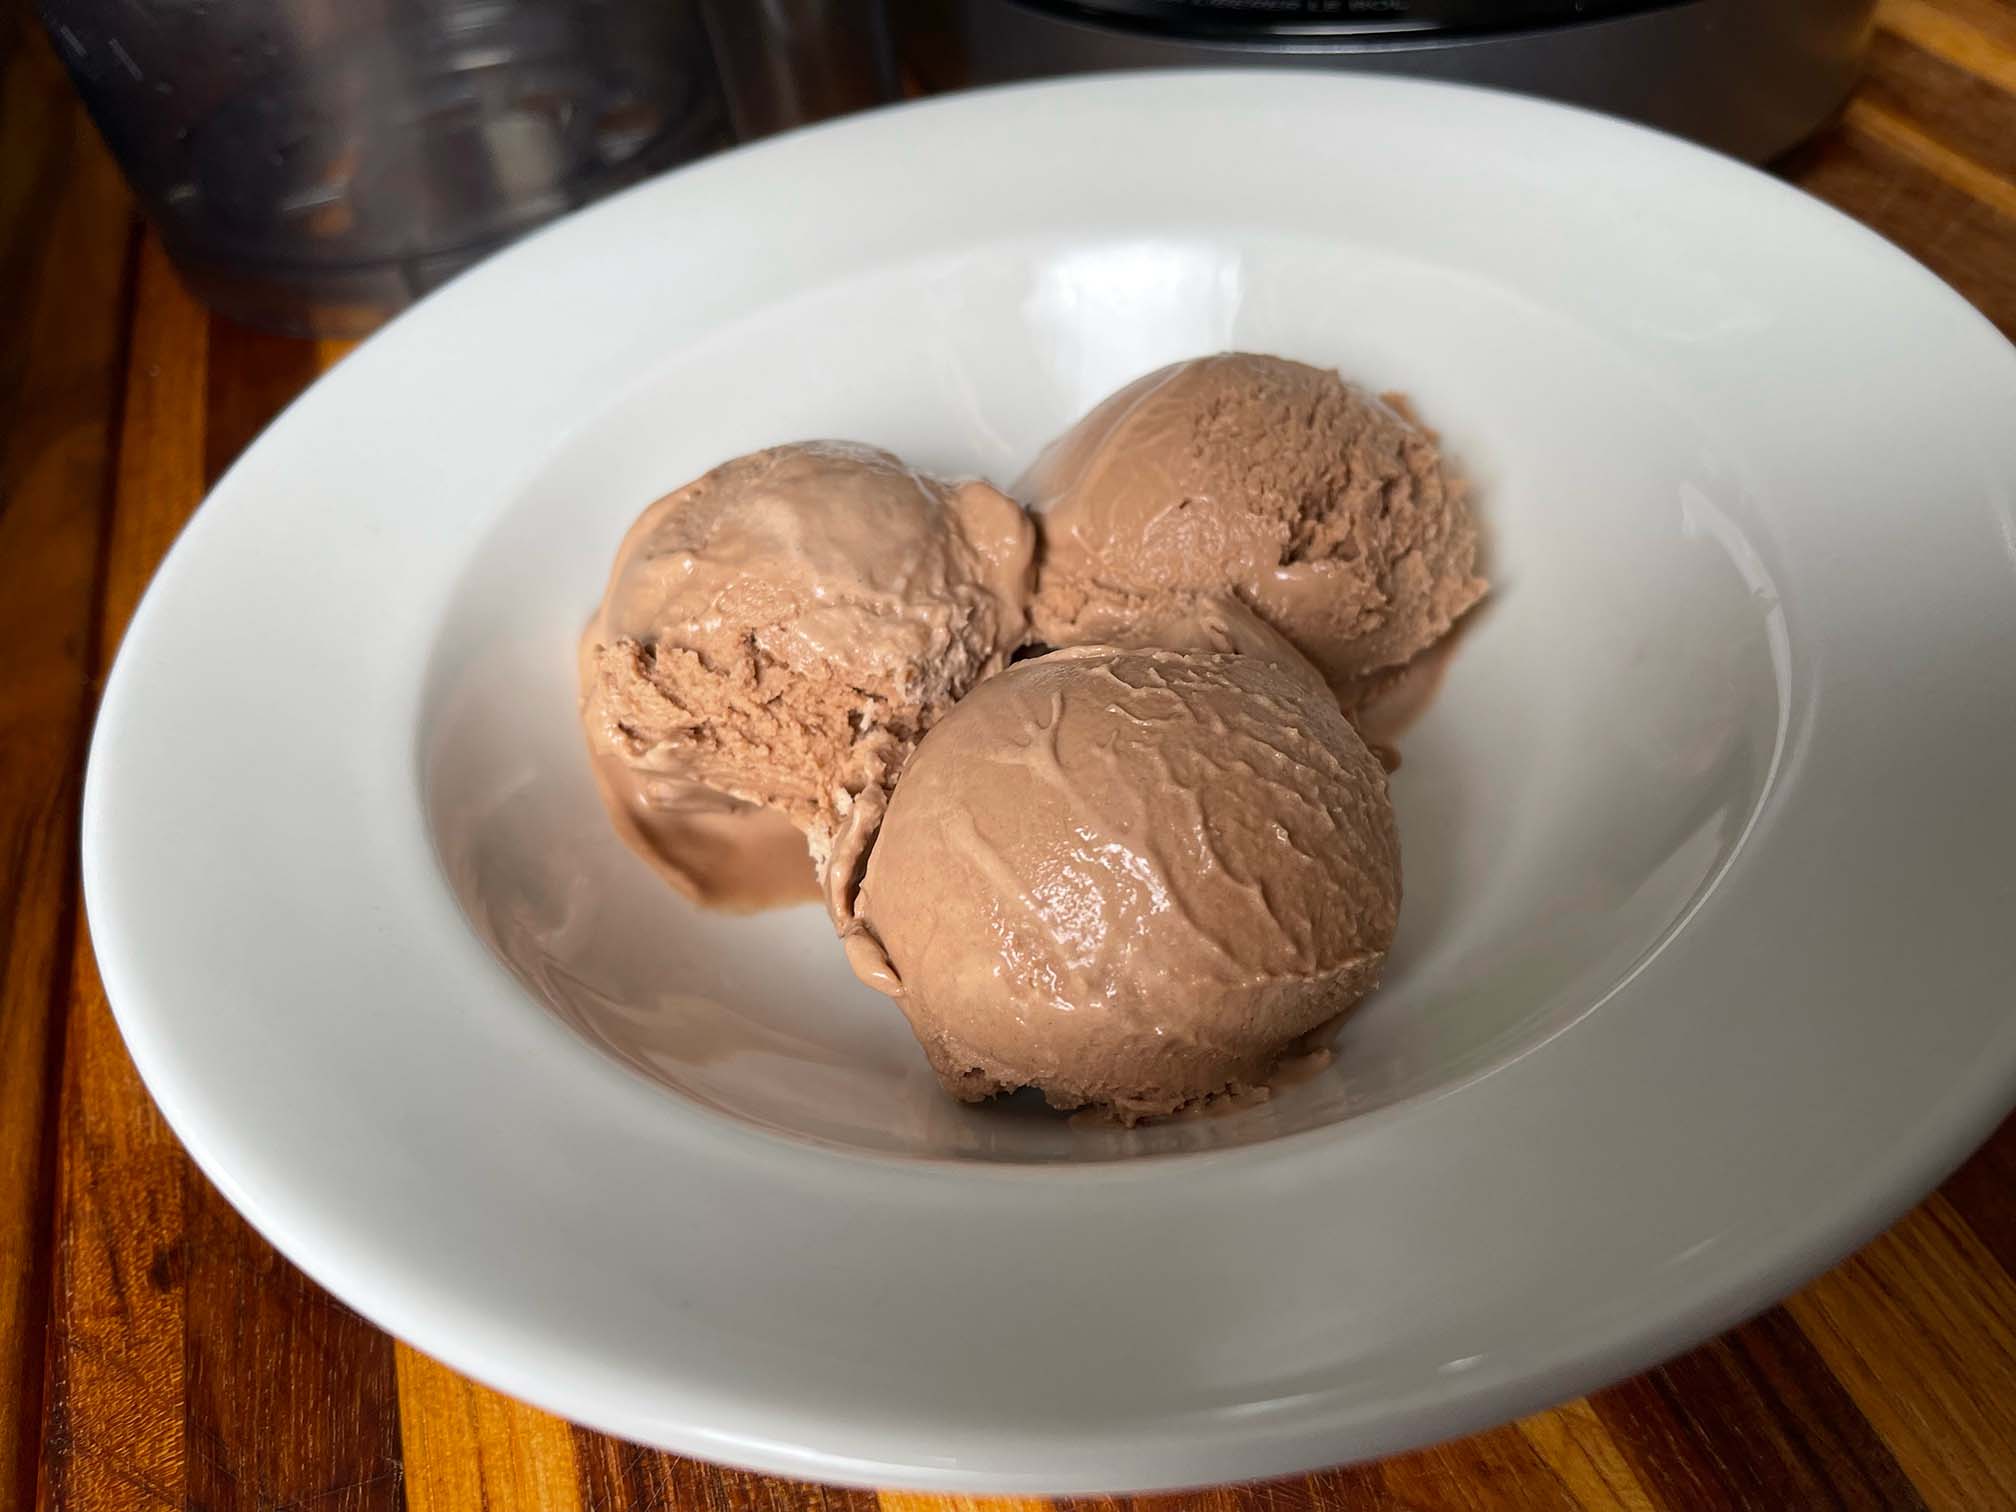 https://www.sizzleandsear.com/wp-content/uploads/2021/12/ninja-creami-review-chocolate-ice-cream-plated.jpg